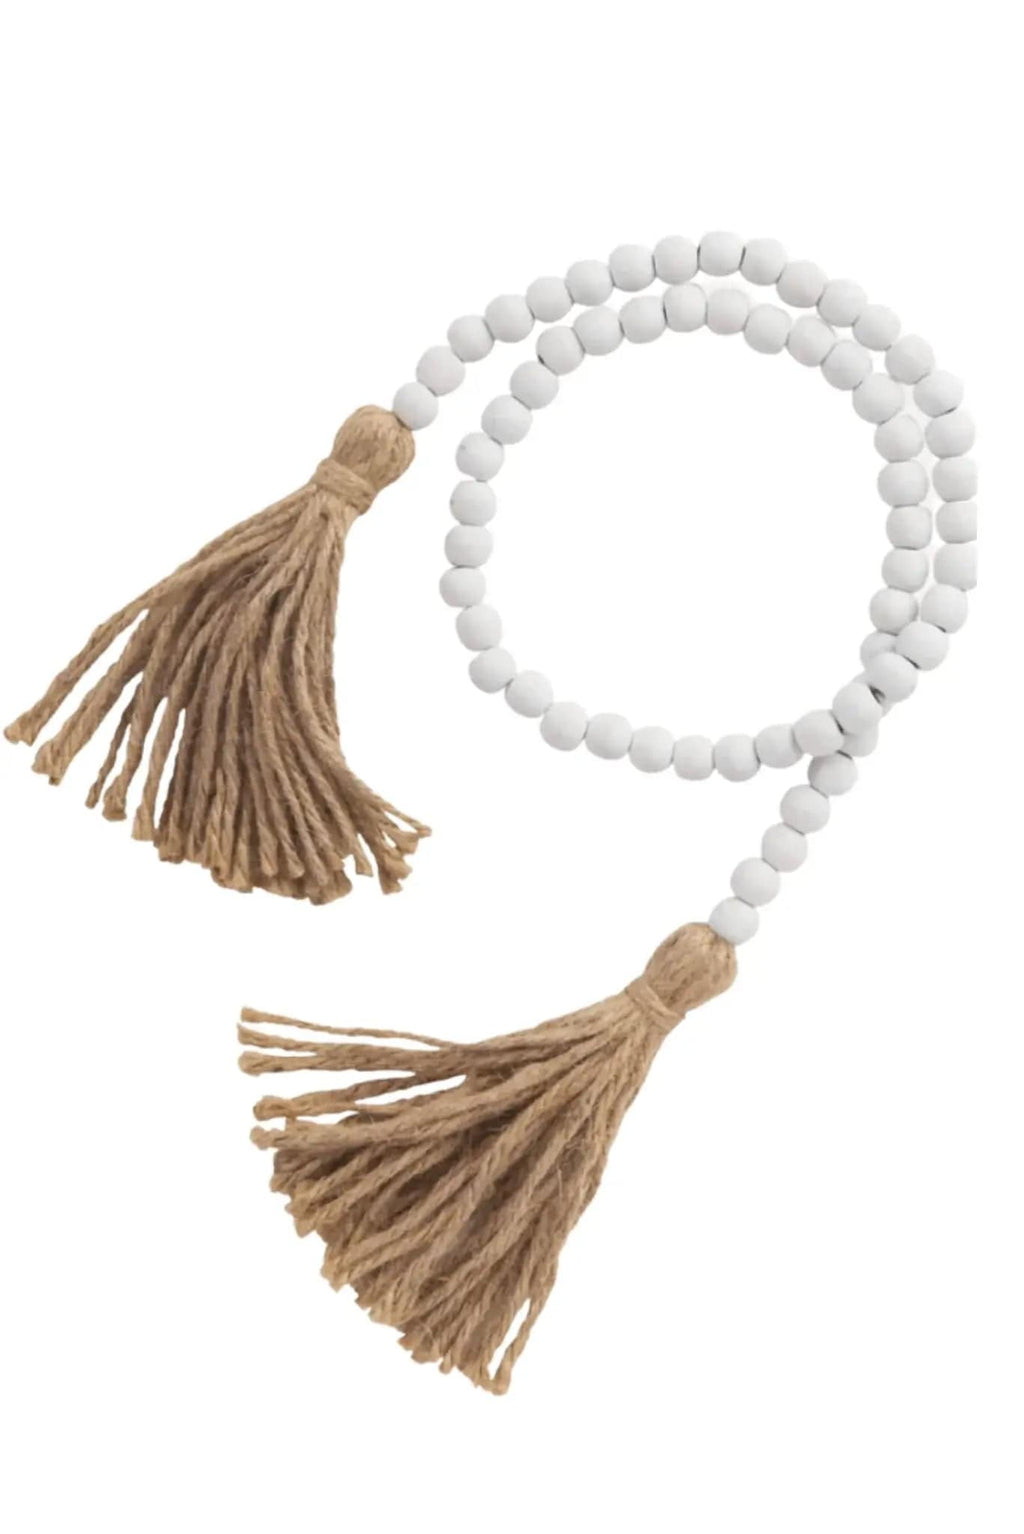 Pokoloko Garland Beads White White garland beads